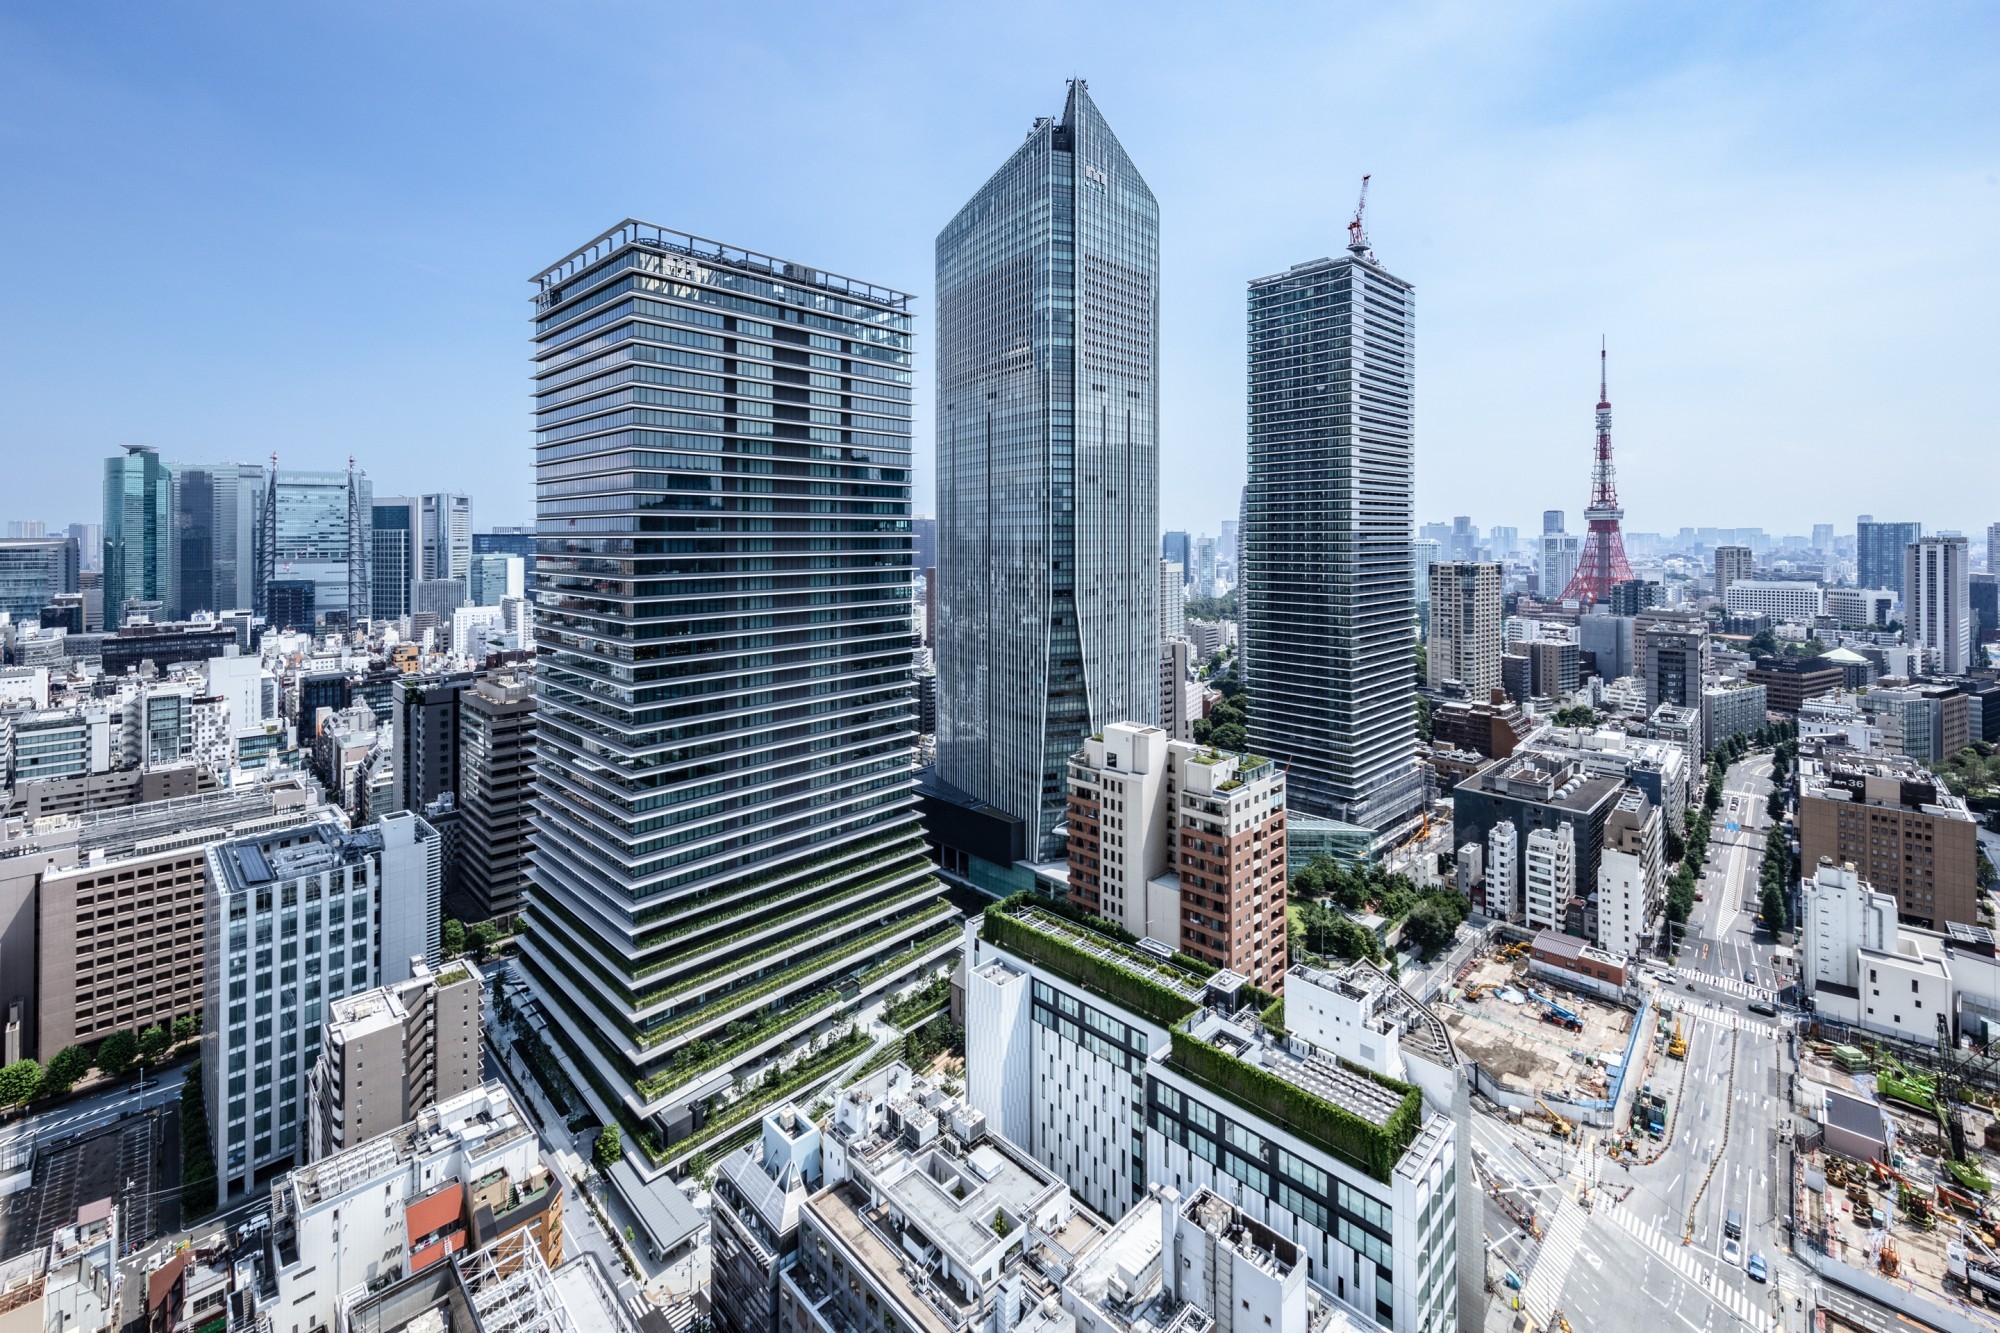 ingenhoven architects, Düsseldorf, Deutschland: Toranomon Hills Towers, Tokio, Japan